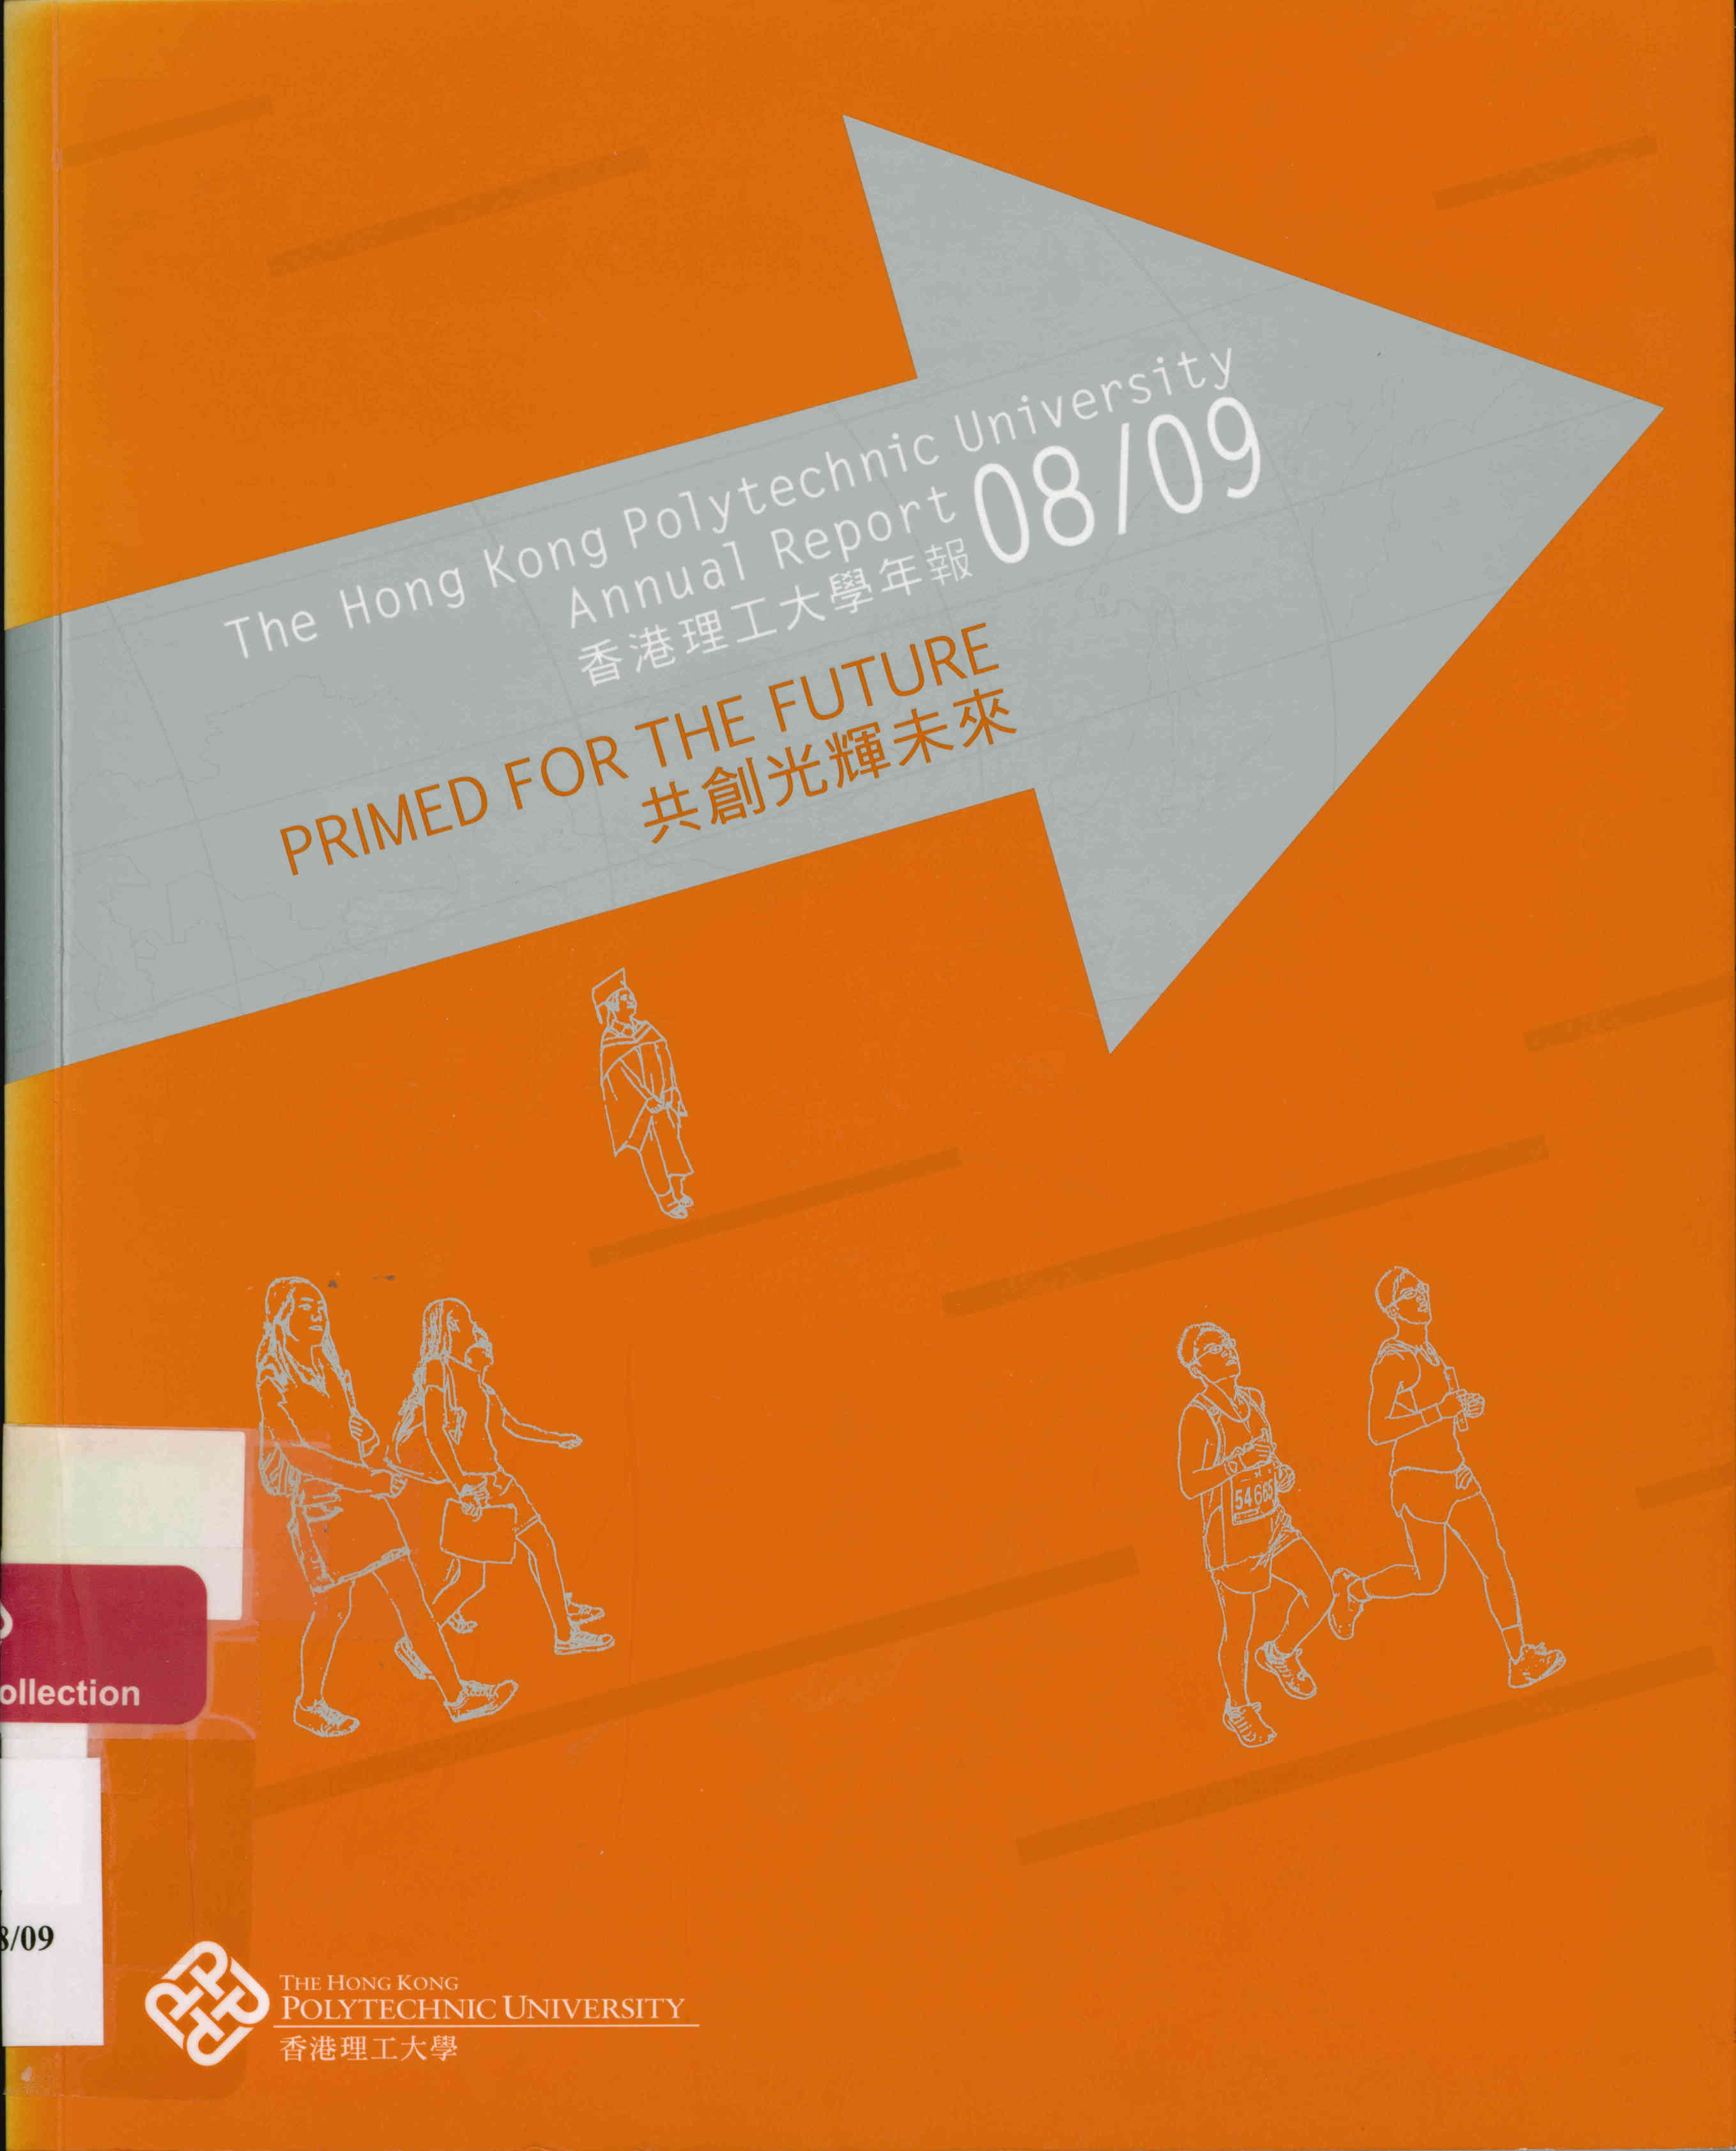 The Hong Kong Polytechnic University Annual Report 2008/09